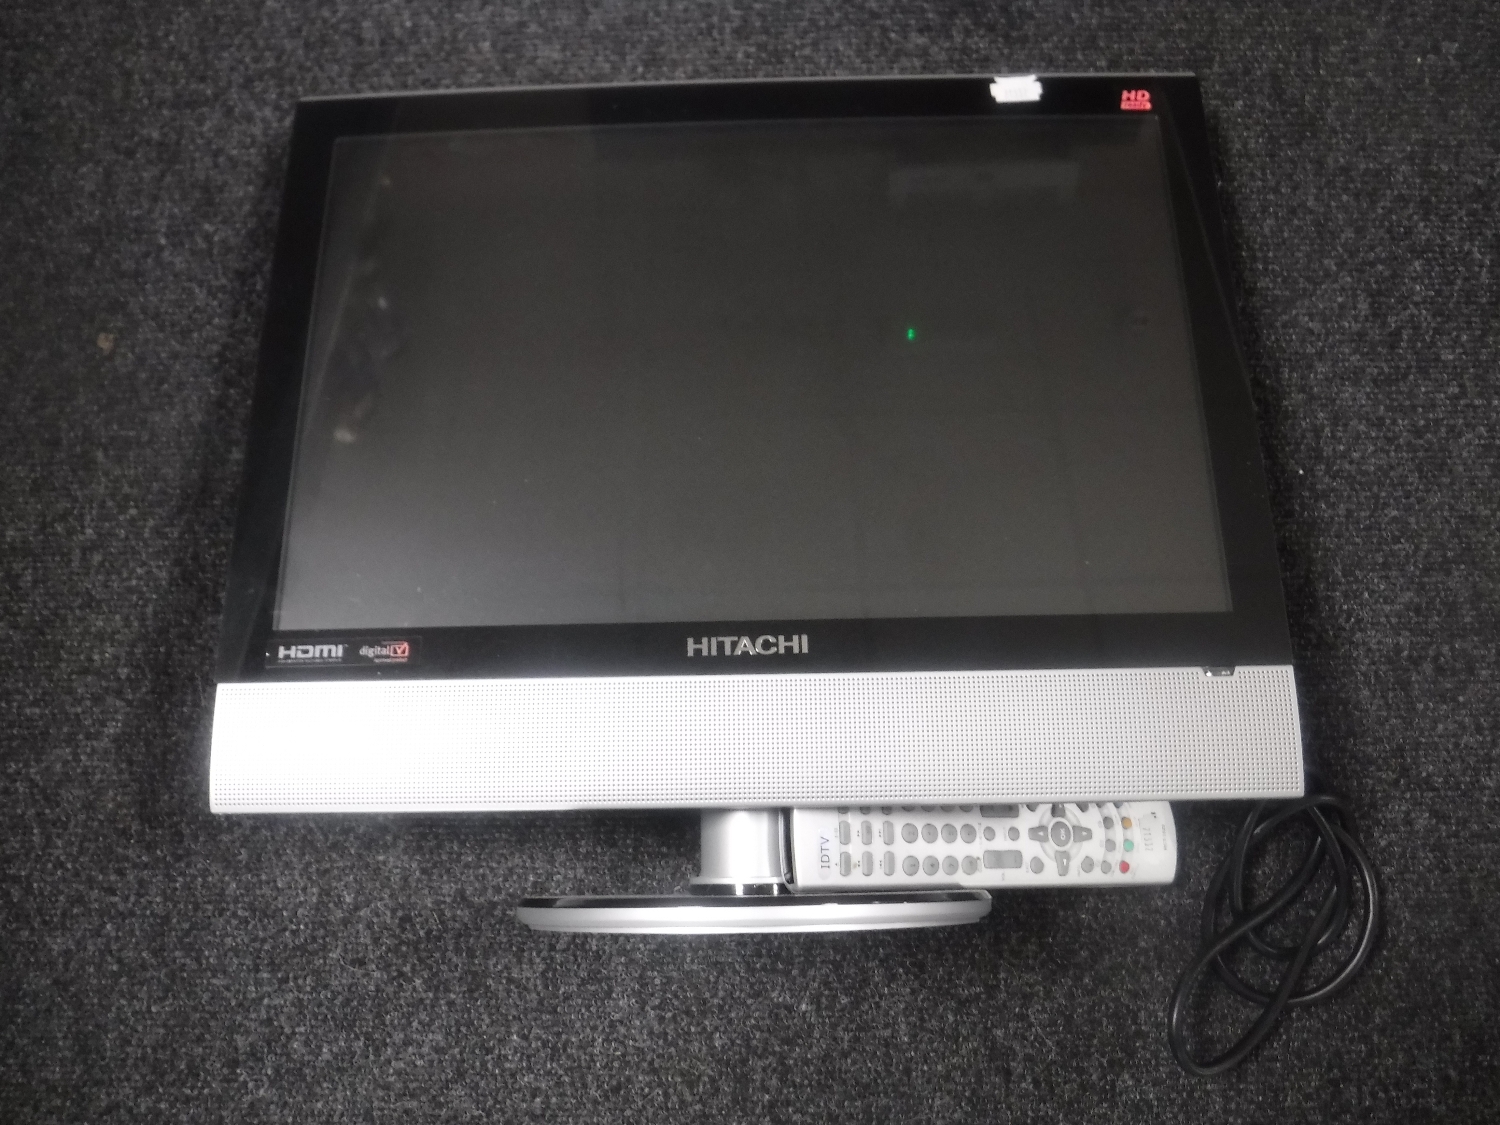 A Hitachi 19" LCD TV with remote